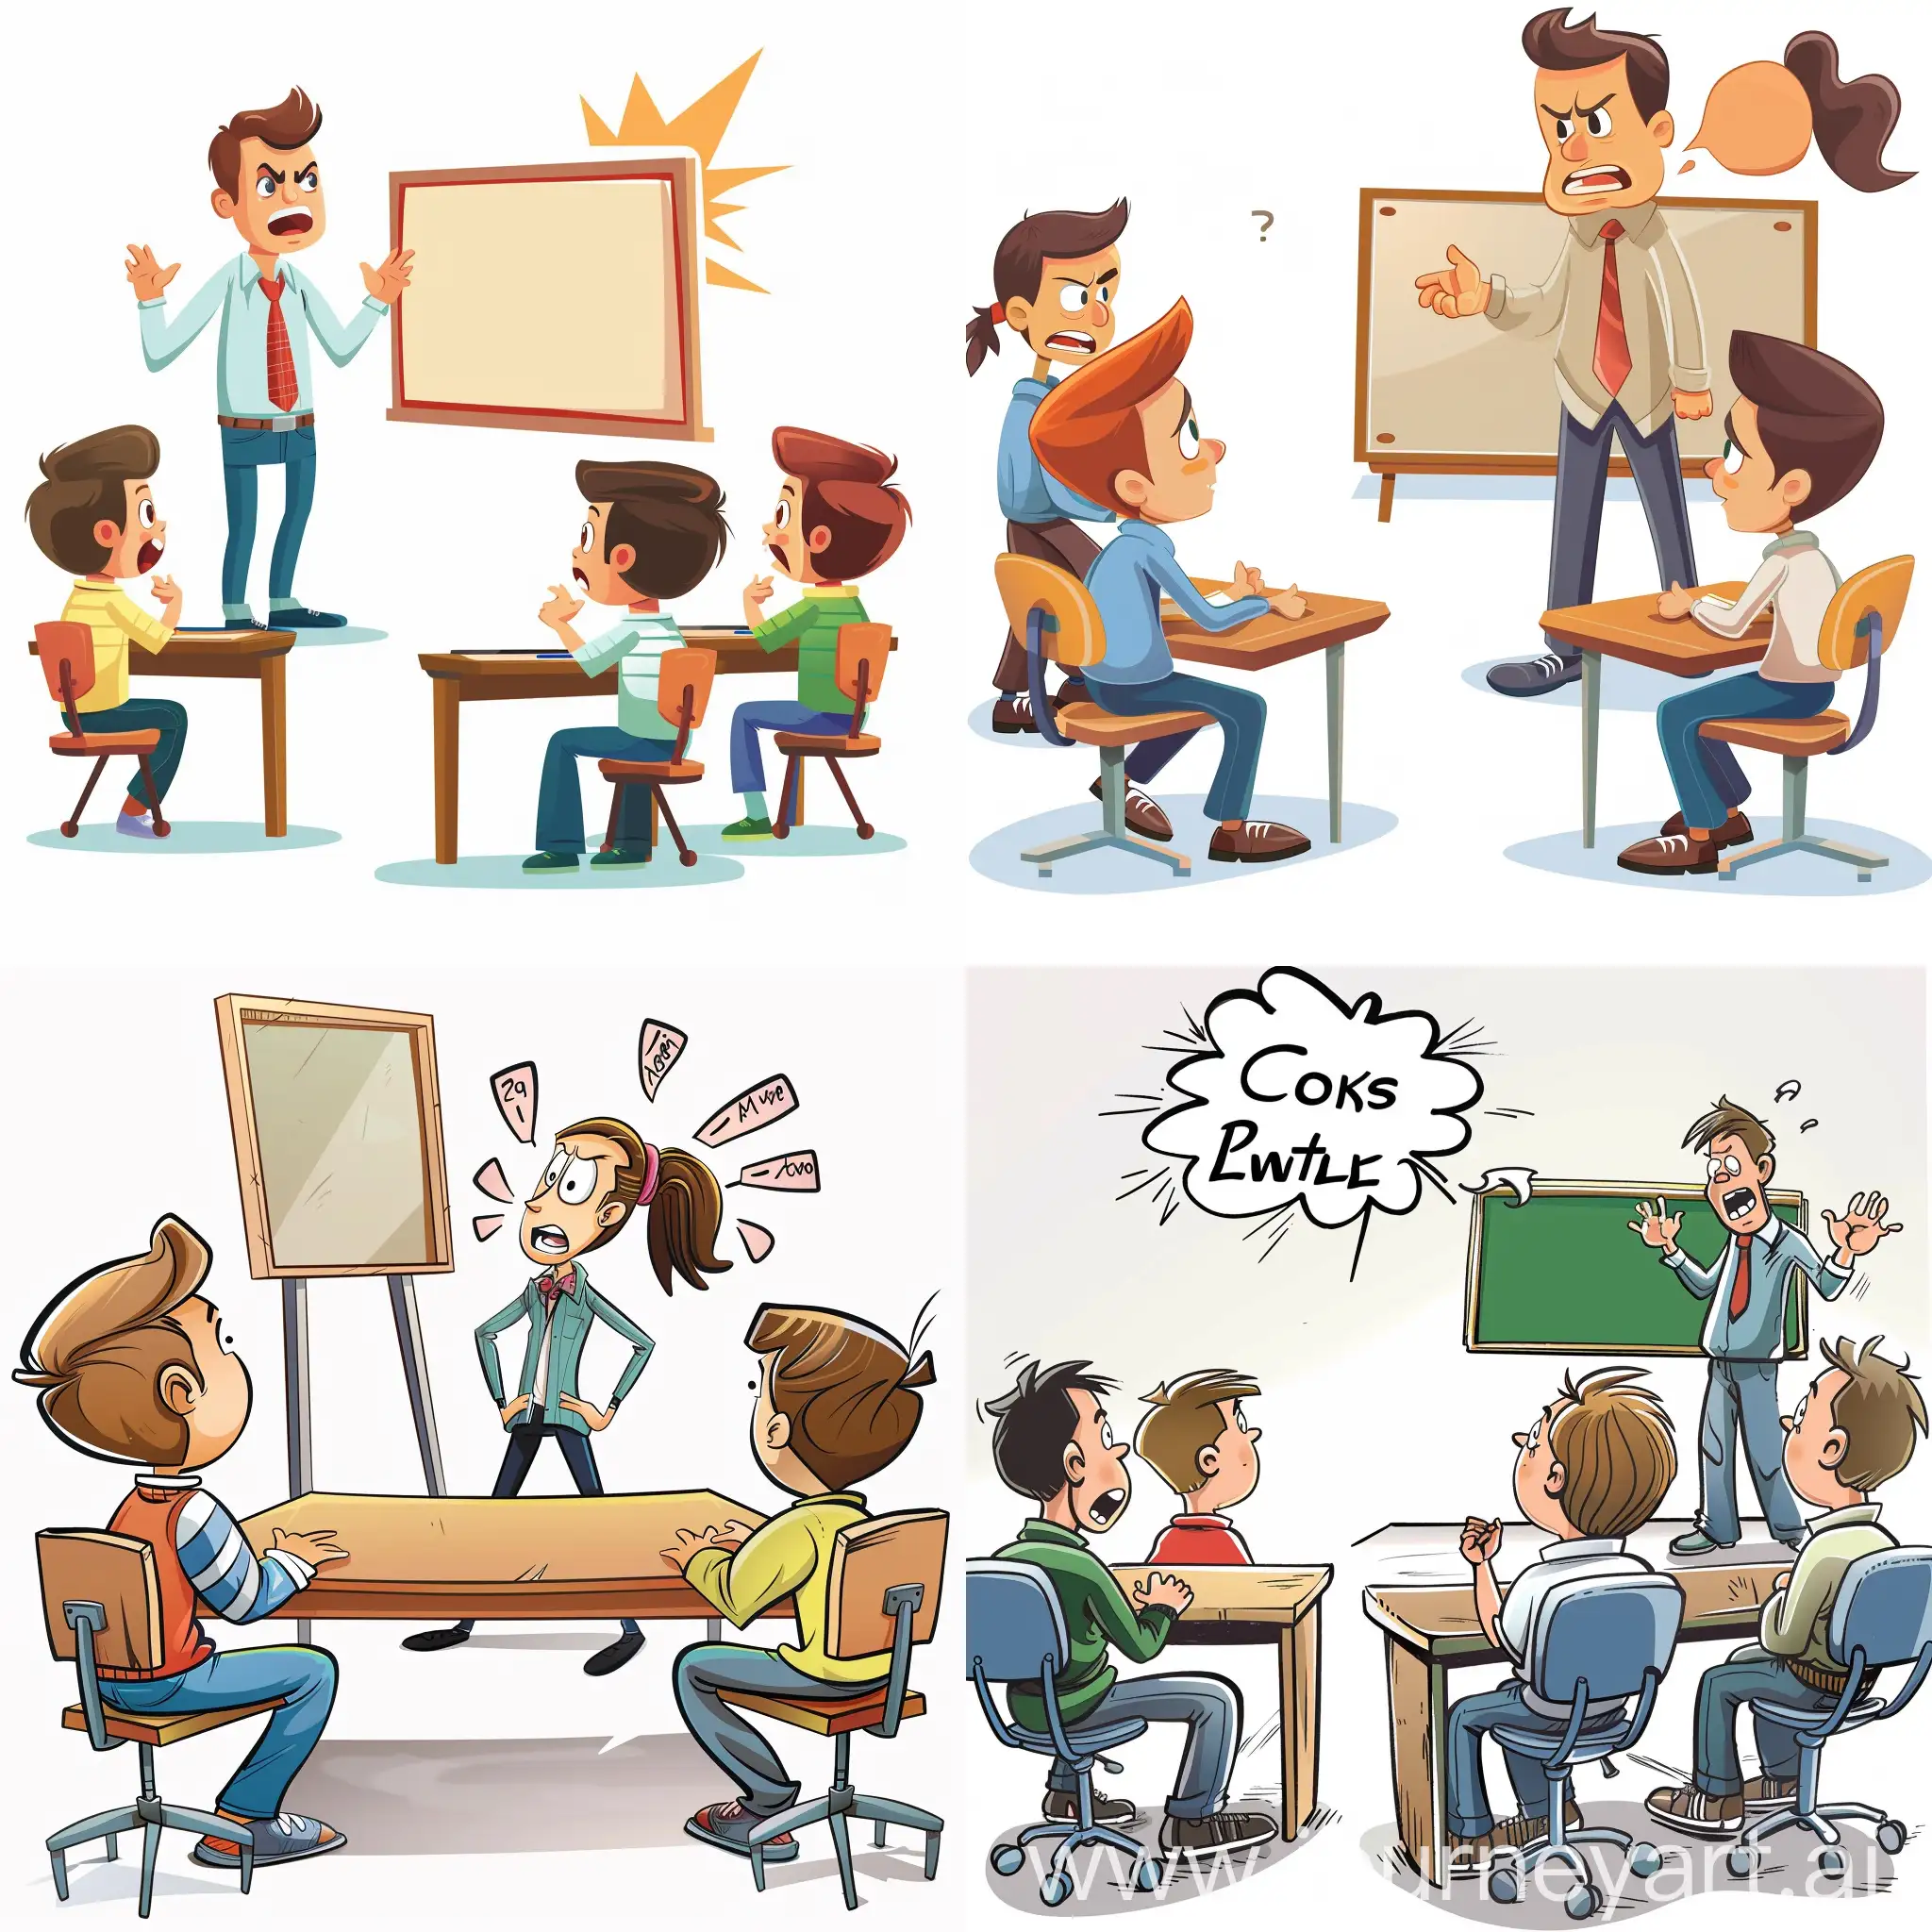 Disruptive-Students-Talking-in-Class-Irritate-Teacher-Cartoon-Illustration